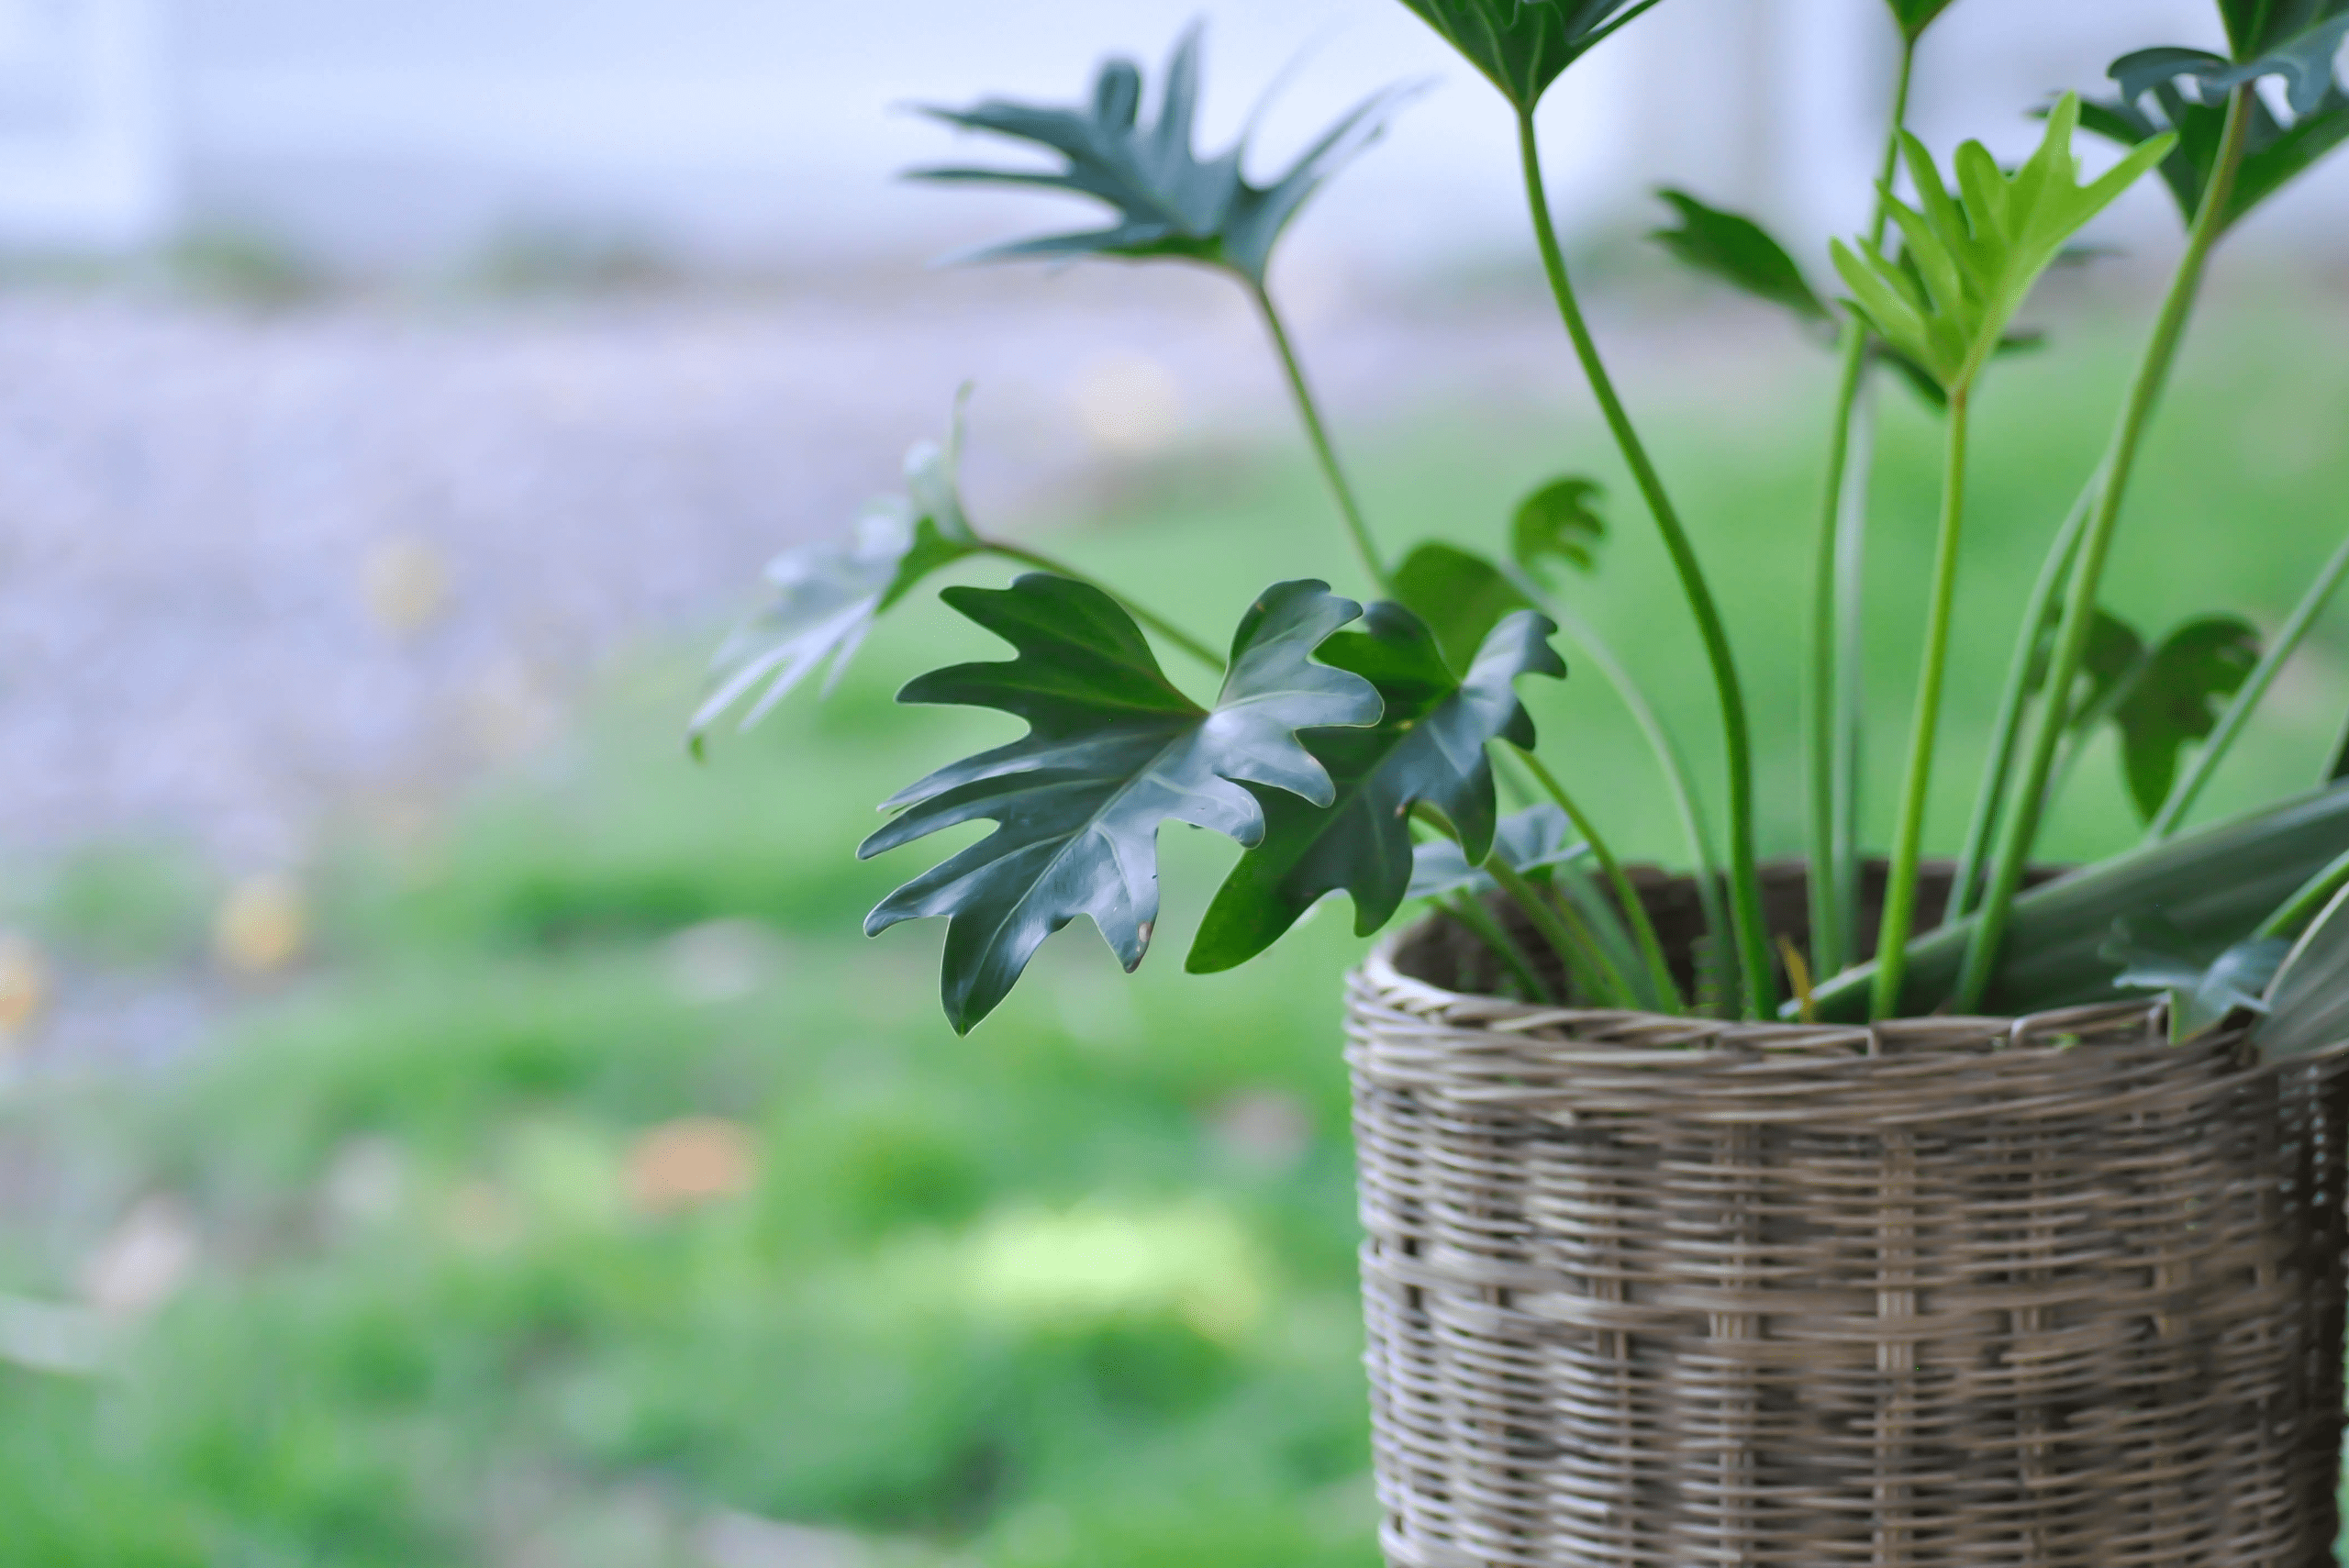 Philodendron Xanadu in wicker planter.